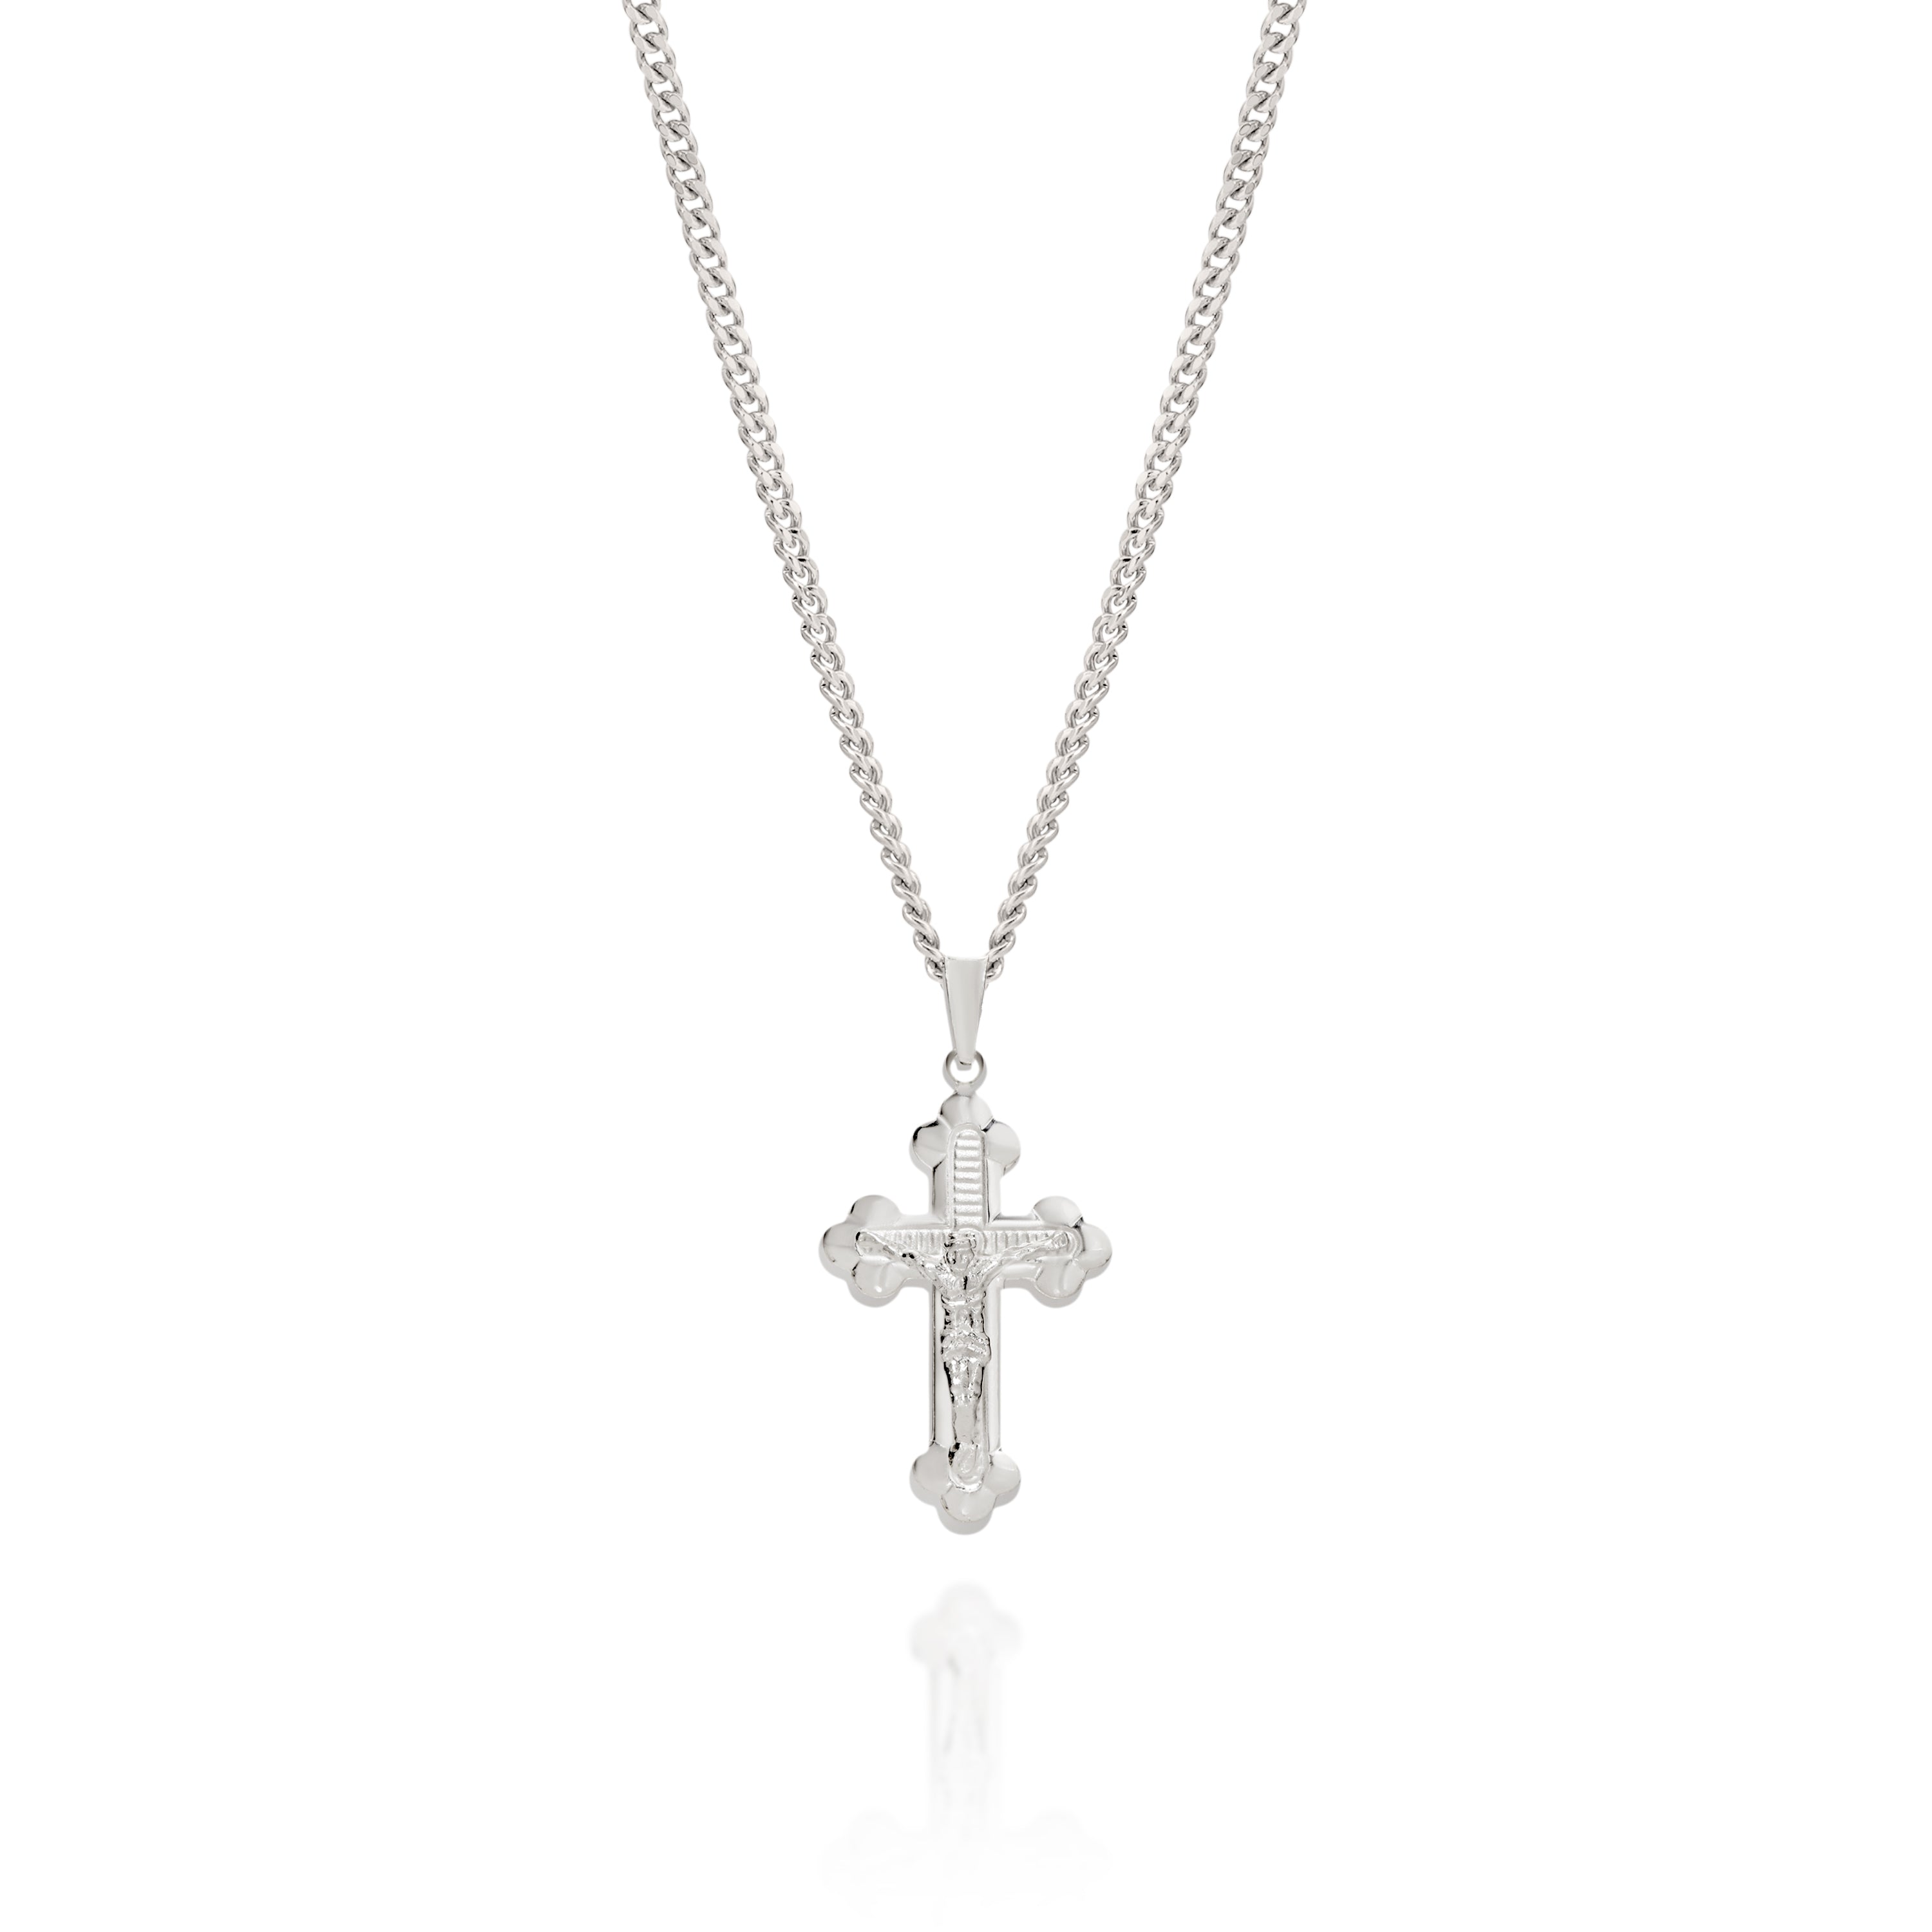 Silver fancy crucifix pendant